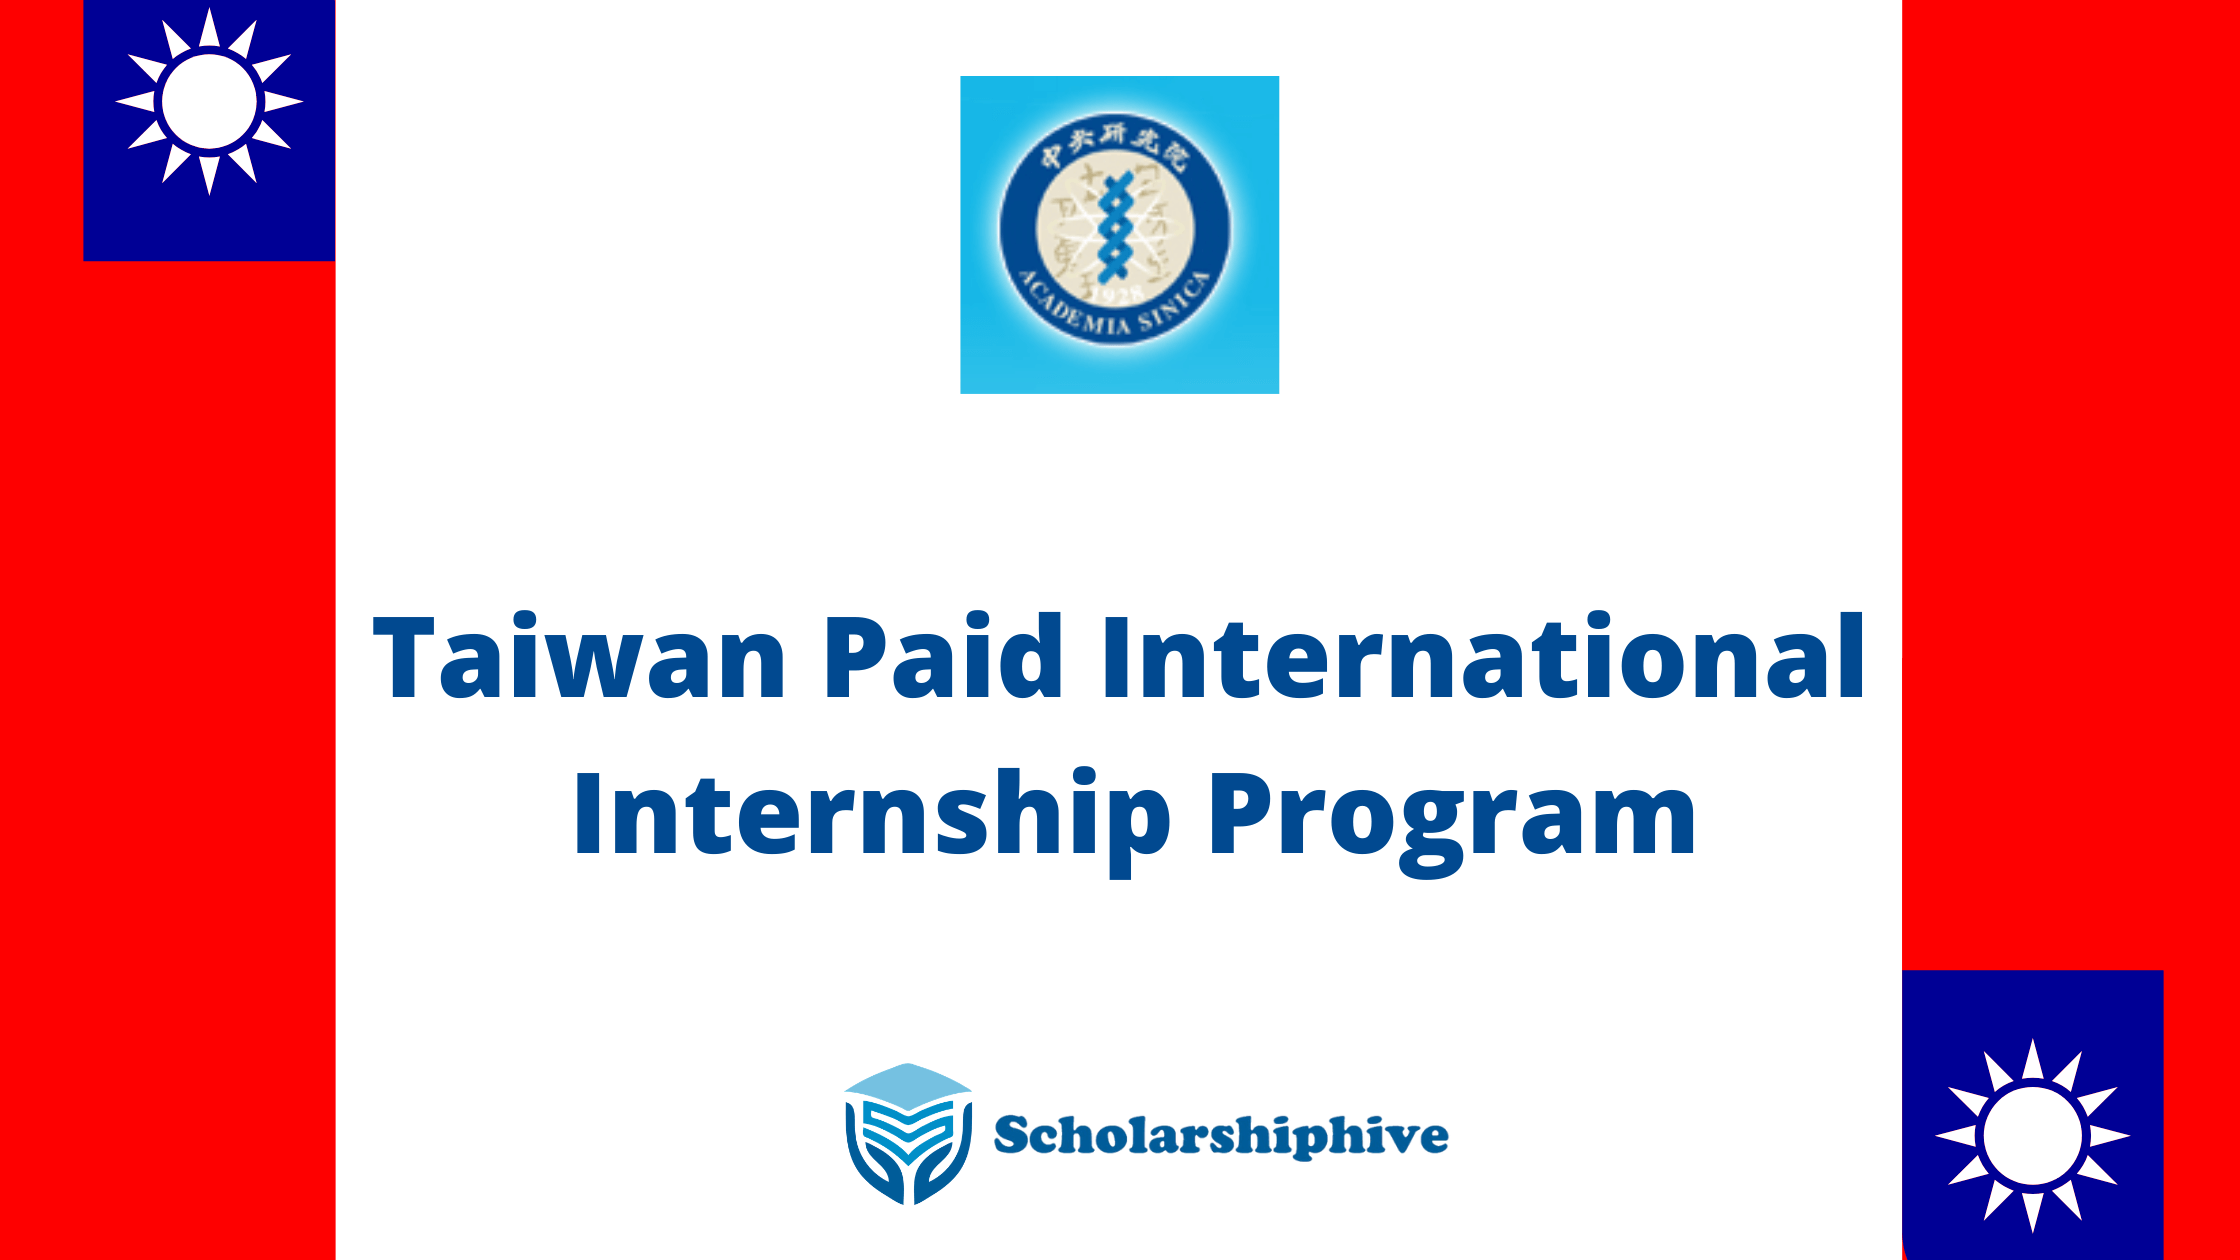 Taiwan Paid International Internship Program Scholarshiphive